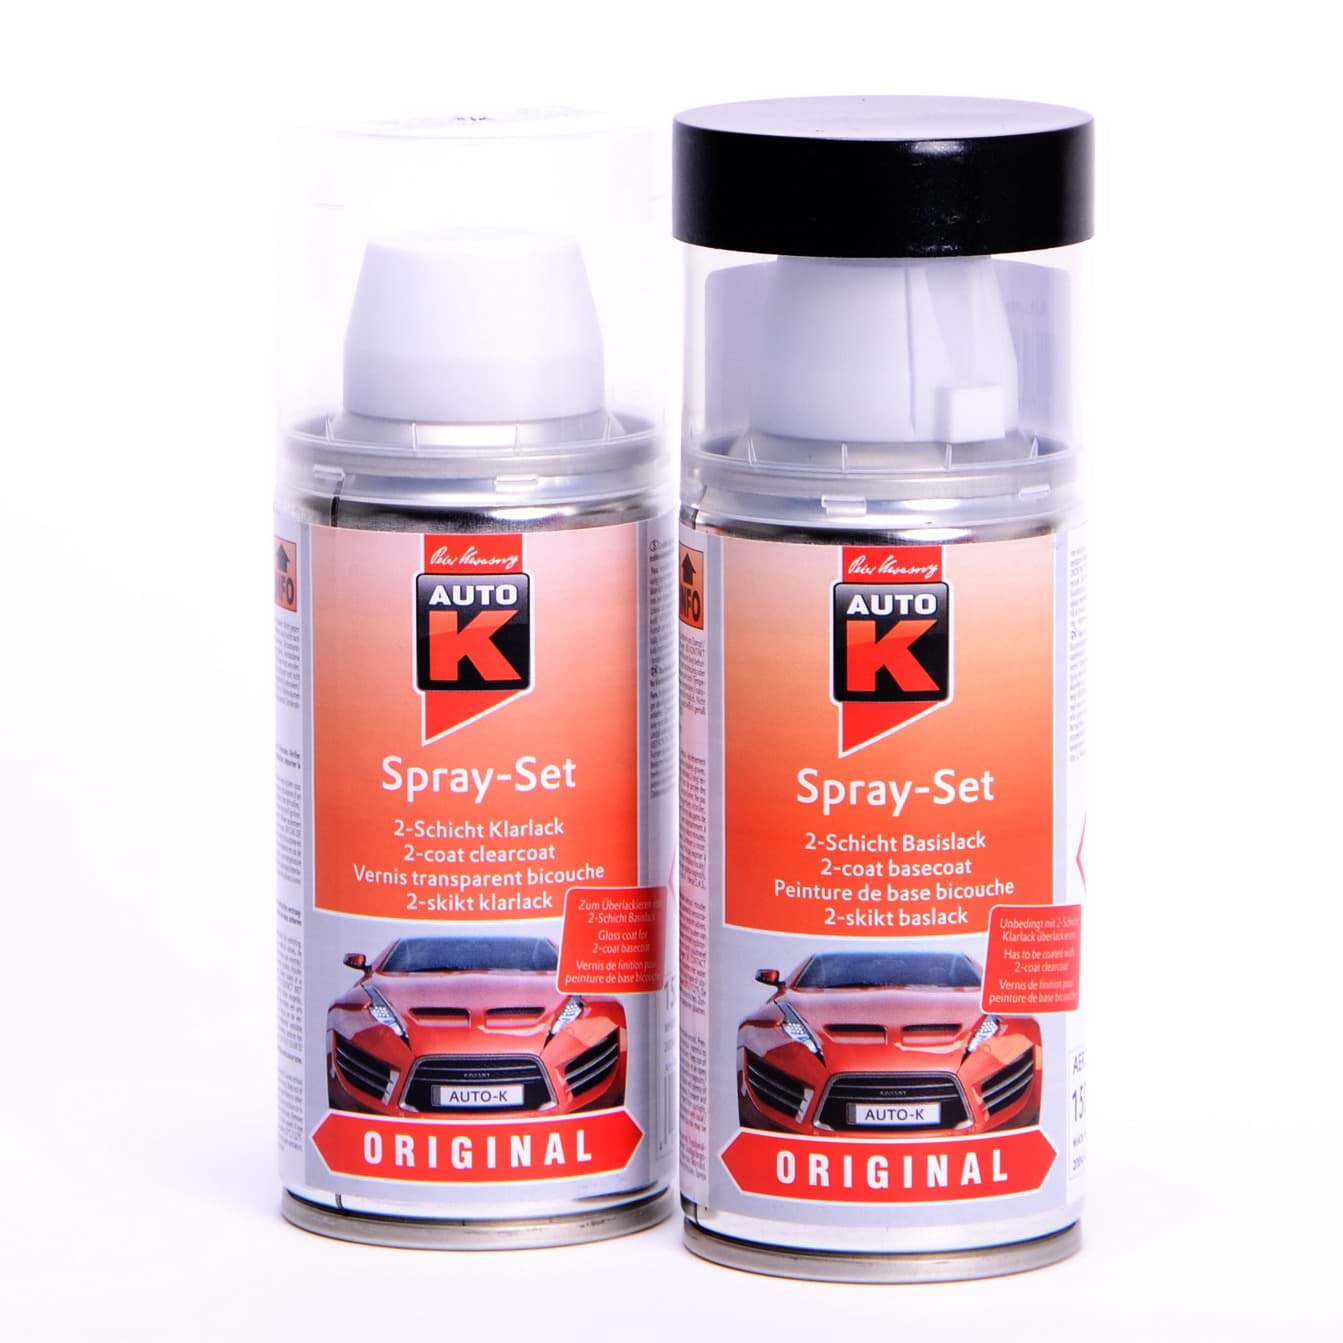 Afbeelding van Auto-K Spray-Set Autolack für Opel 485 Ananasgelb 21417